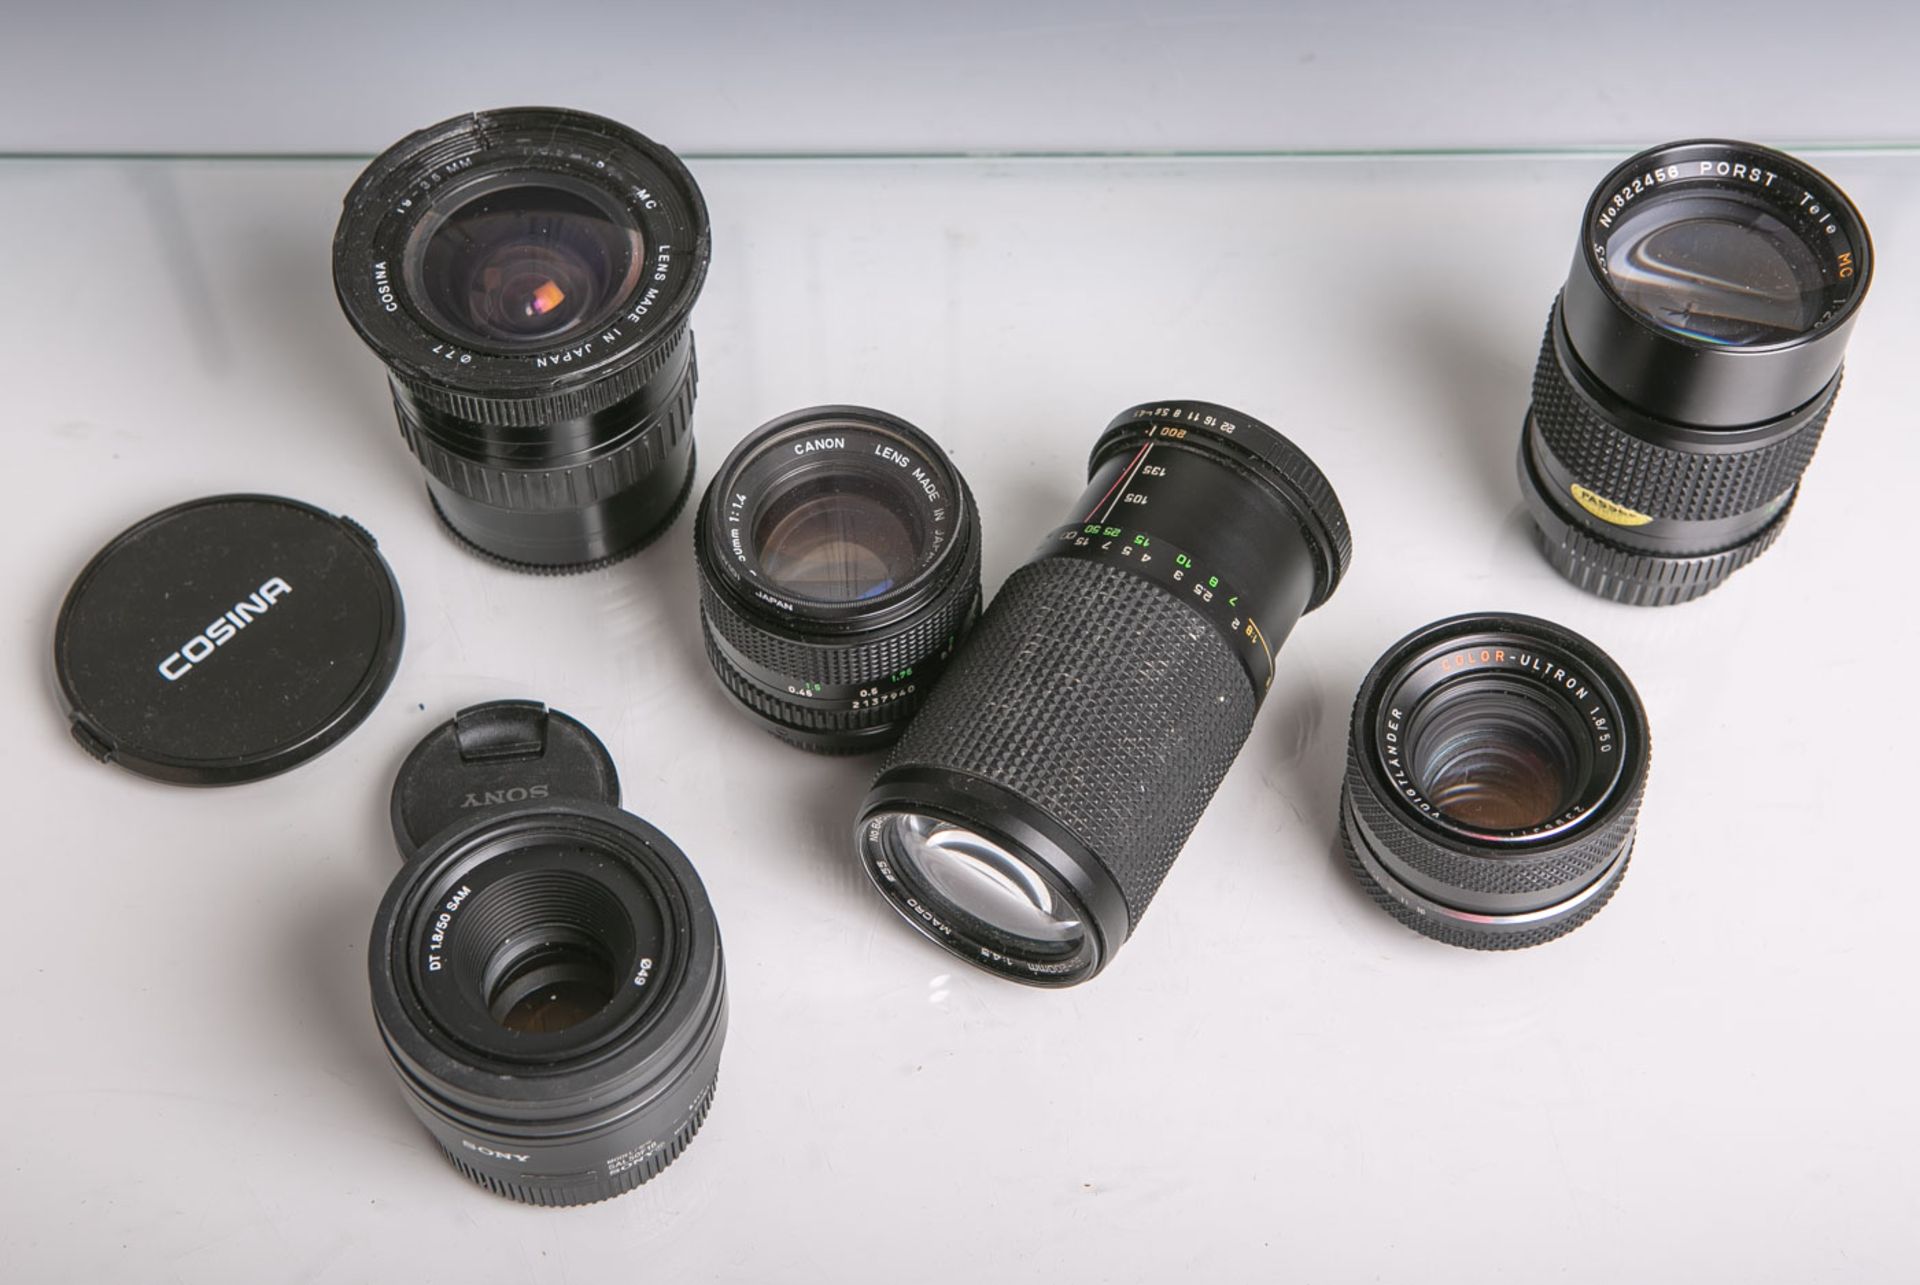 Konvolut von 6 Objektiven, bestehend aus: 1x "Beroflex Auto Zoom" (1:4,5/80-200, Dm. 55mm, Nr.